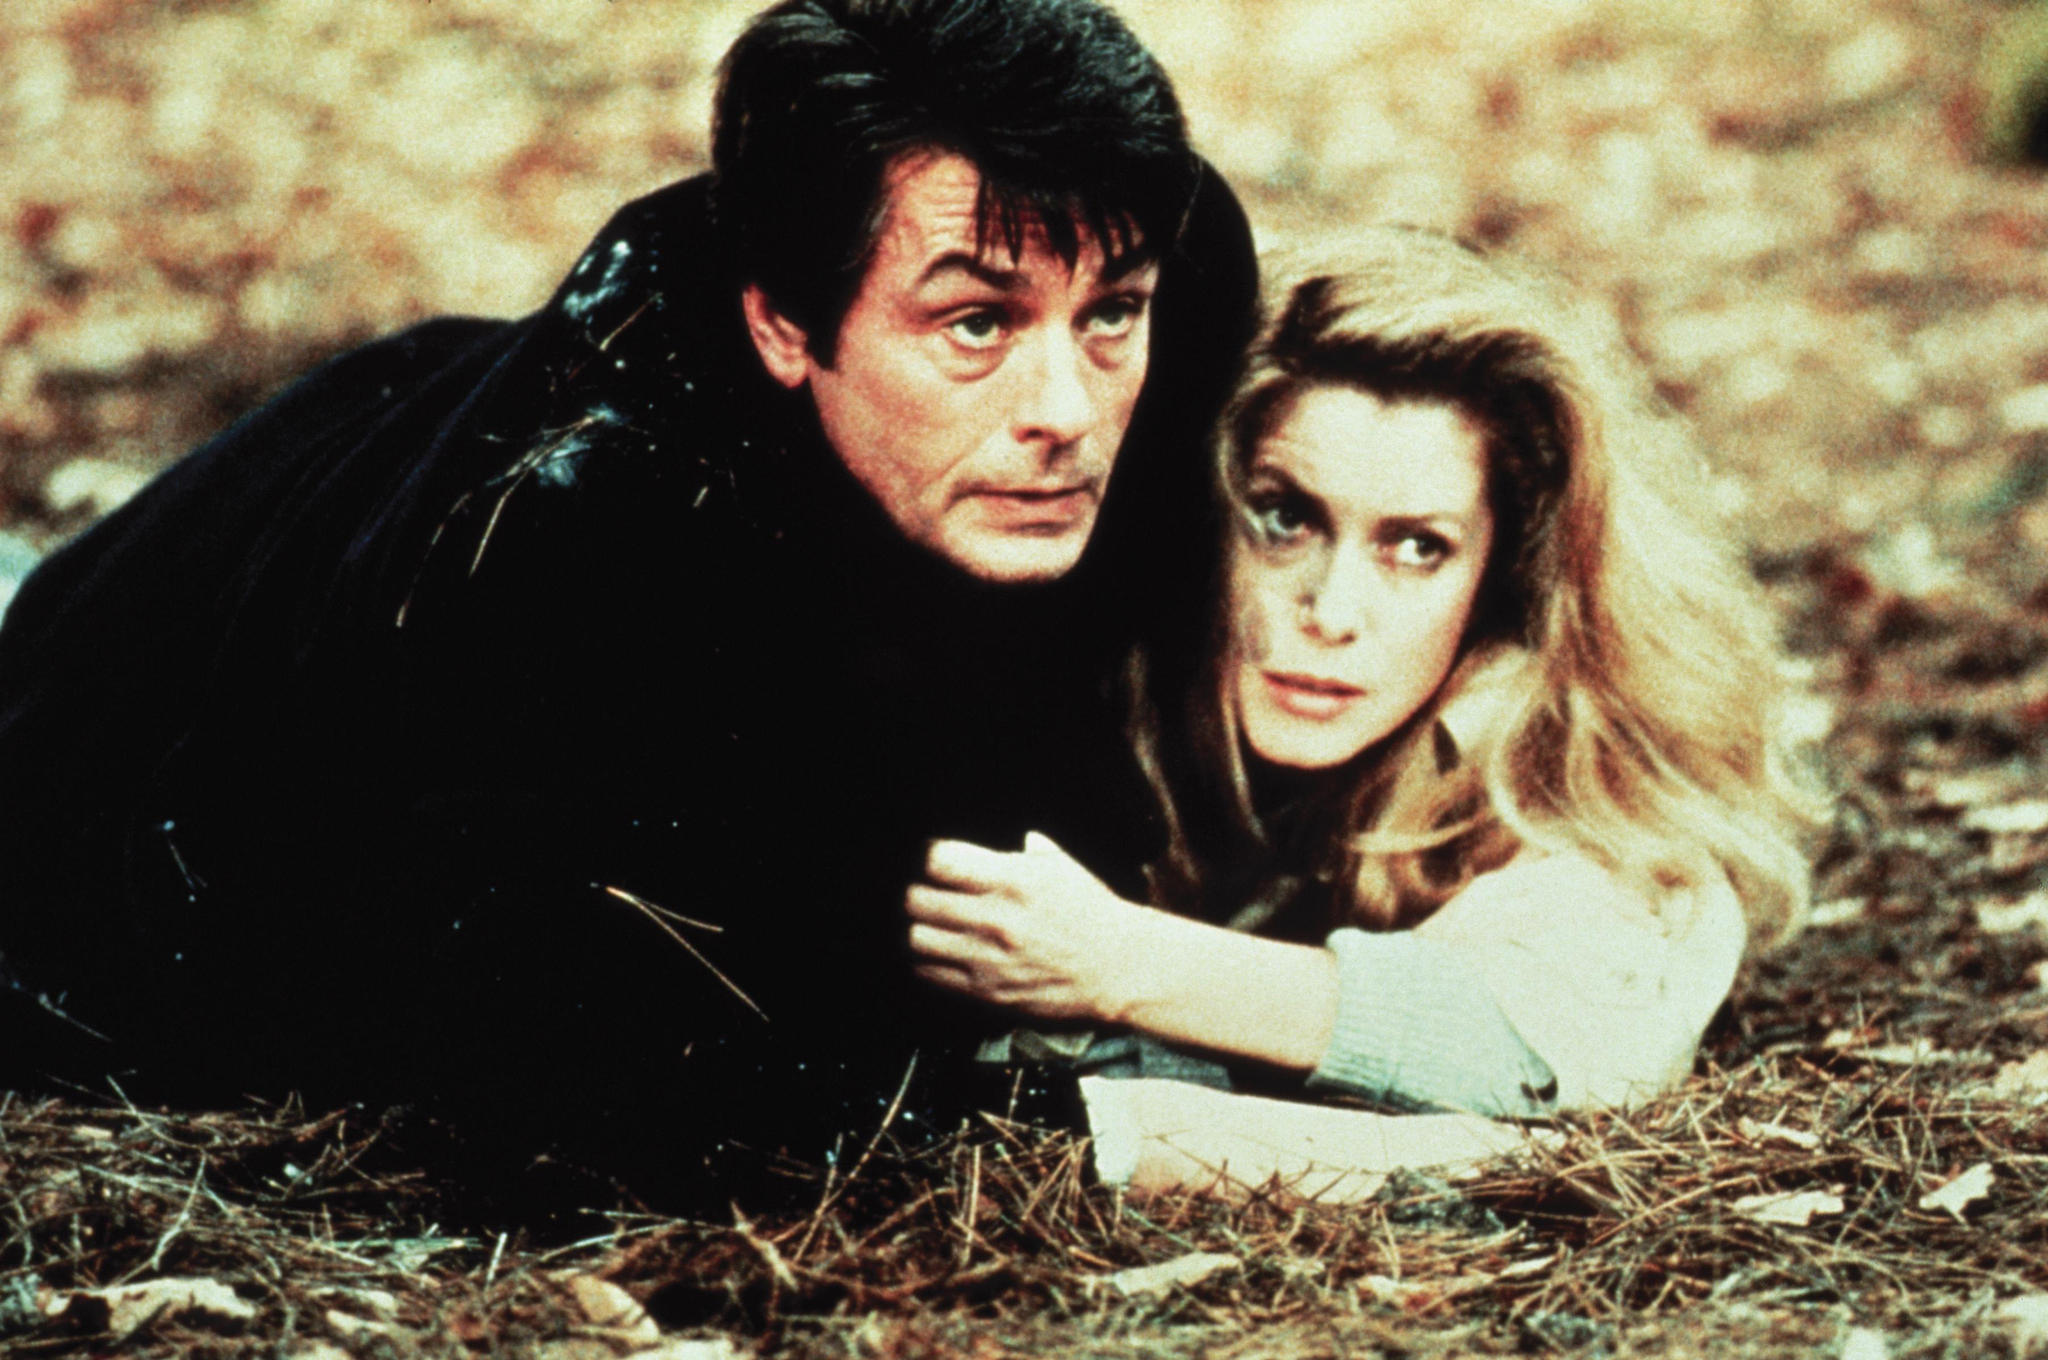 Still of Catherine Deneuve and Alain Delon in Le choc (1982)